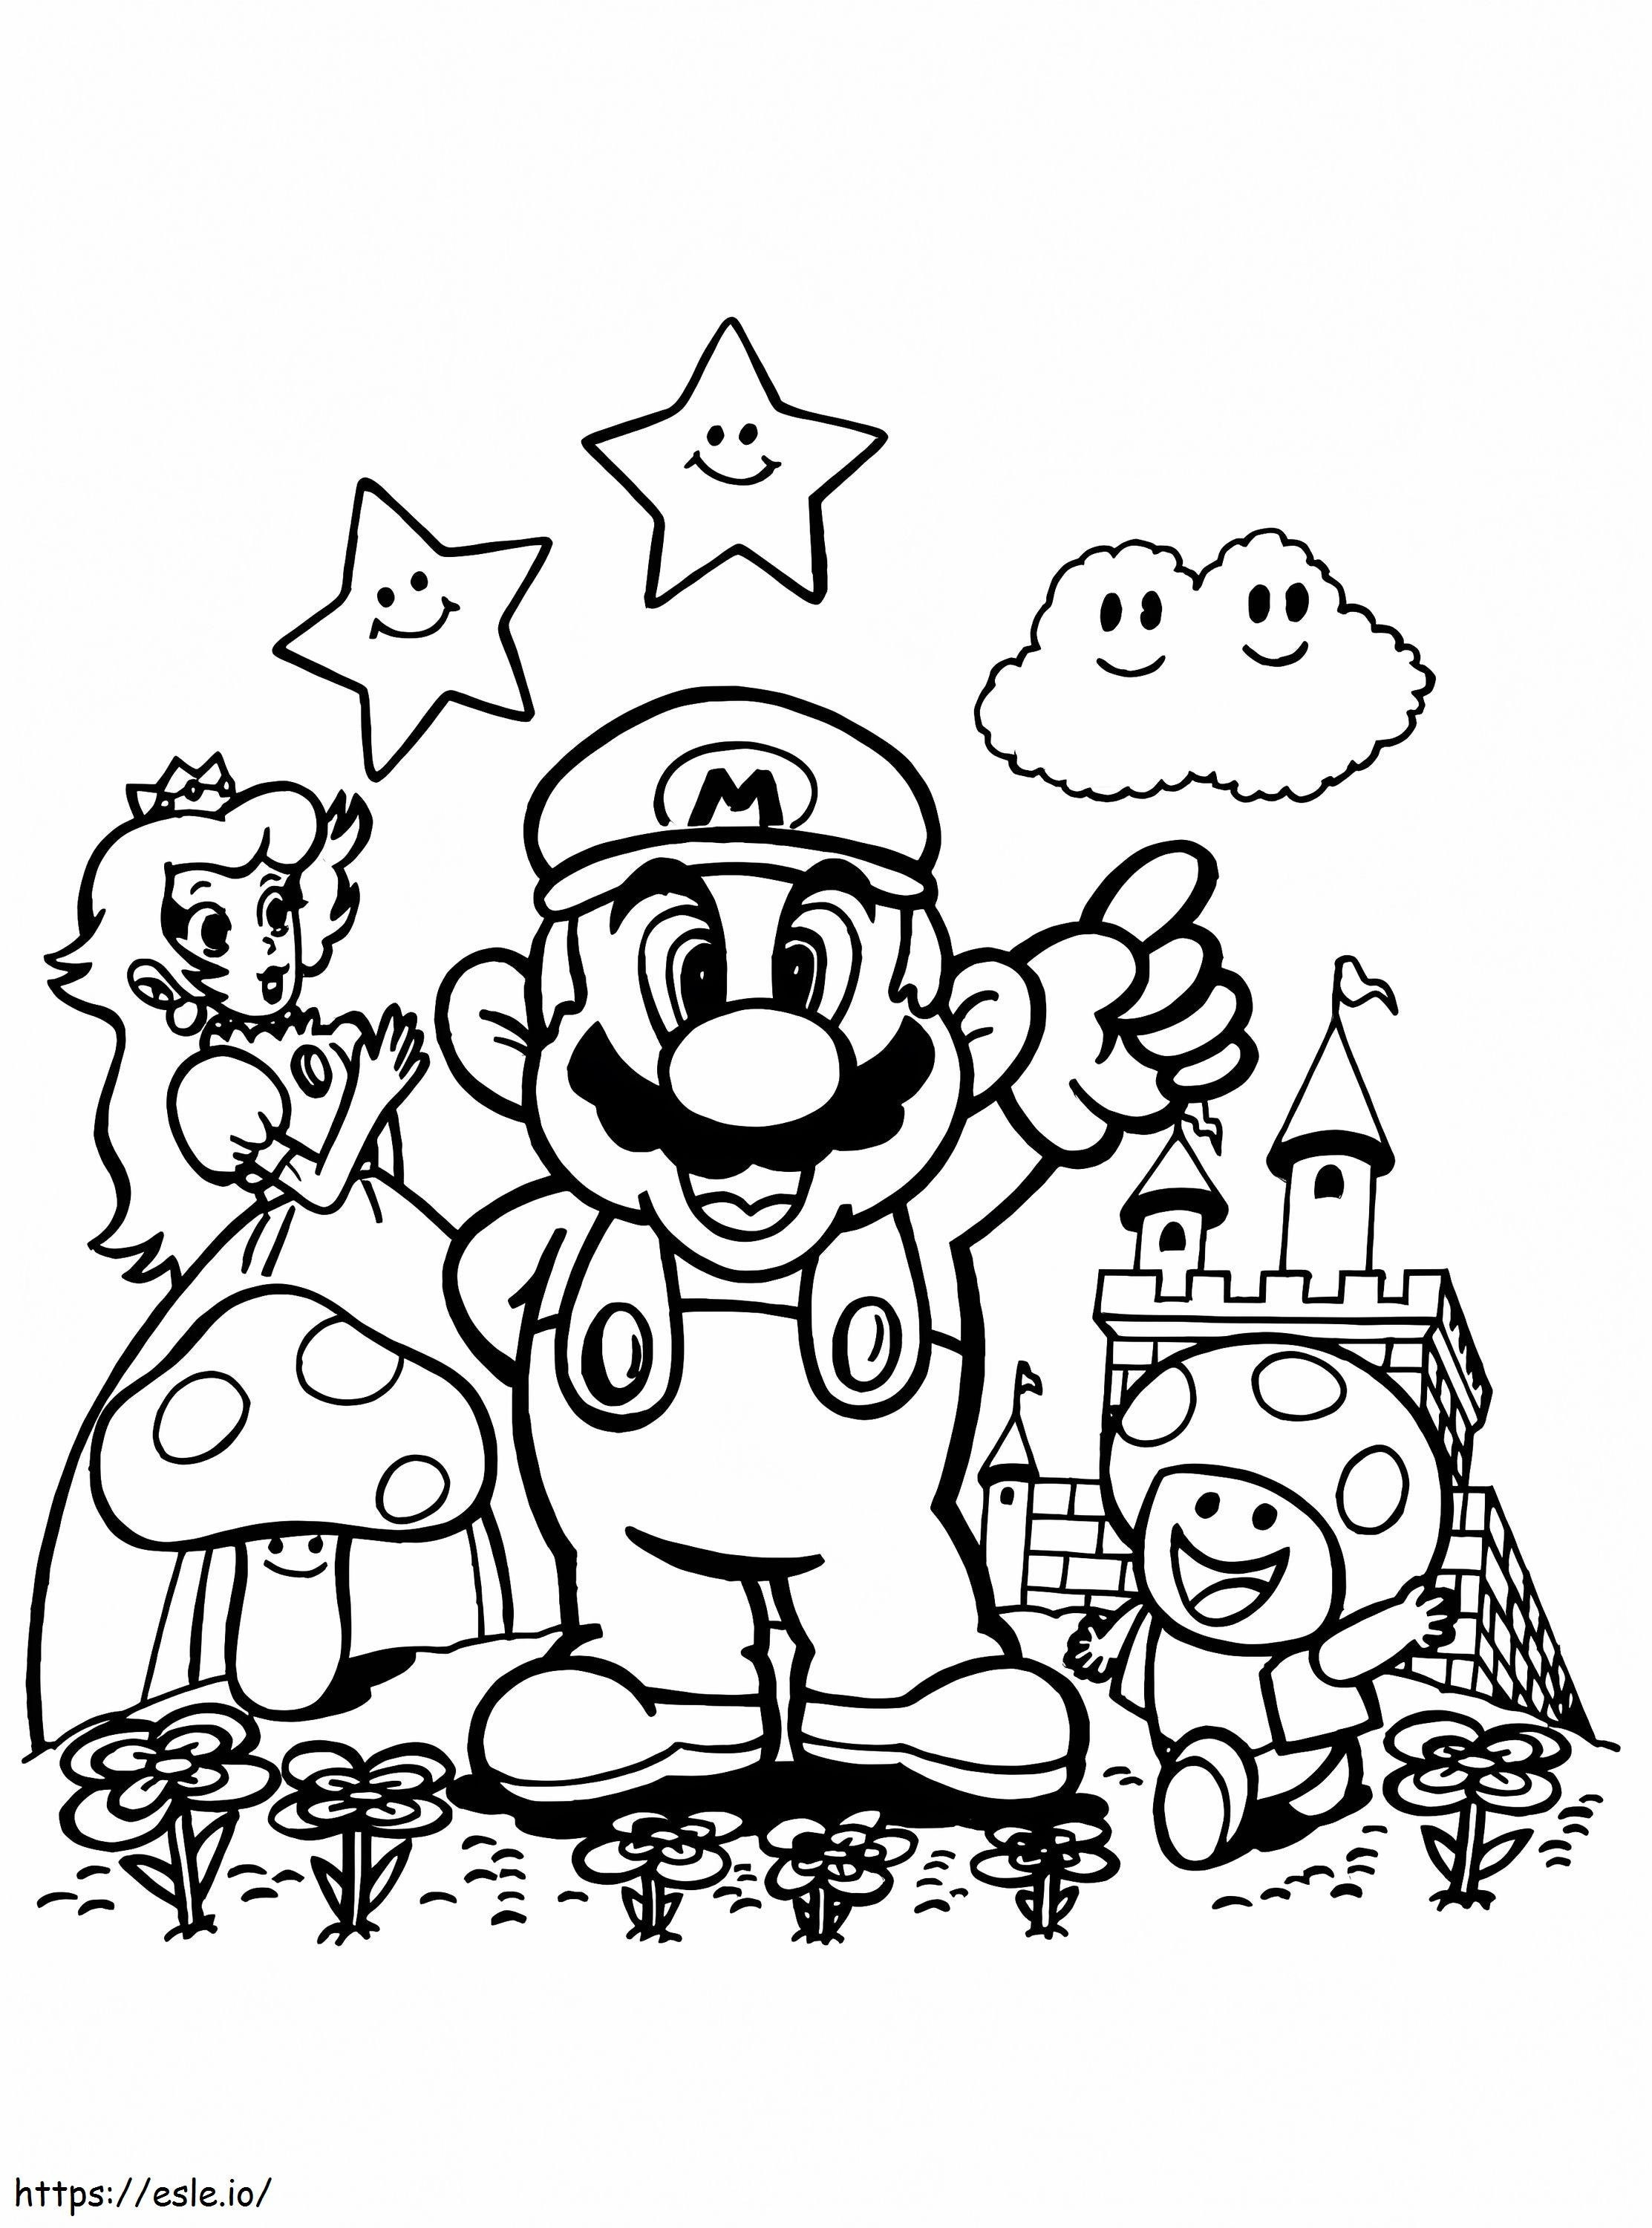 Mario și prieten de colorat